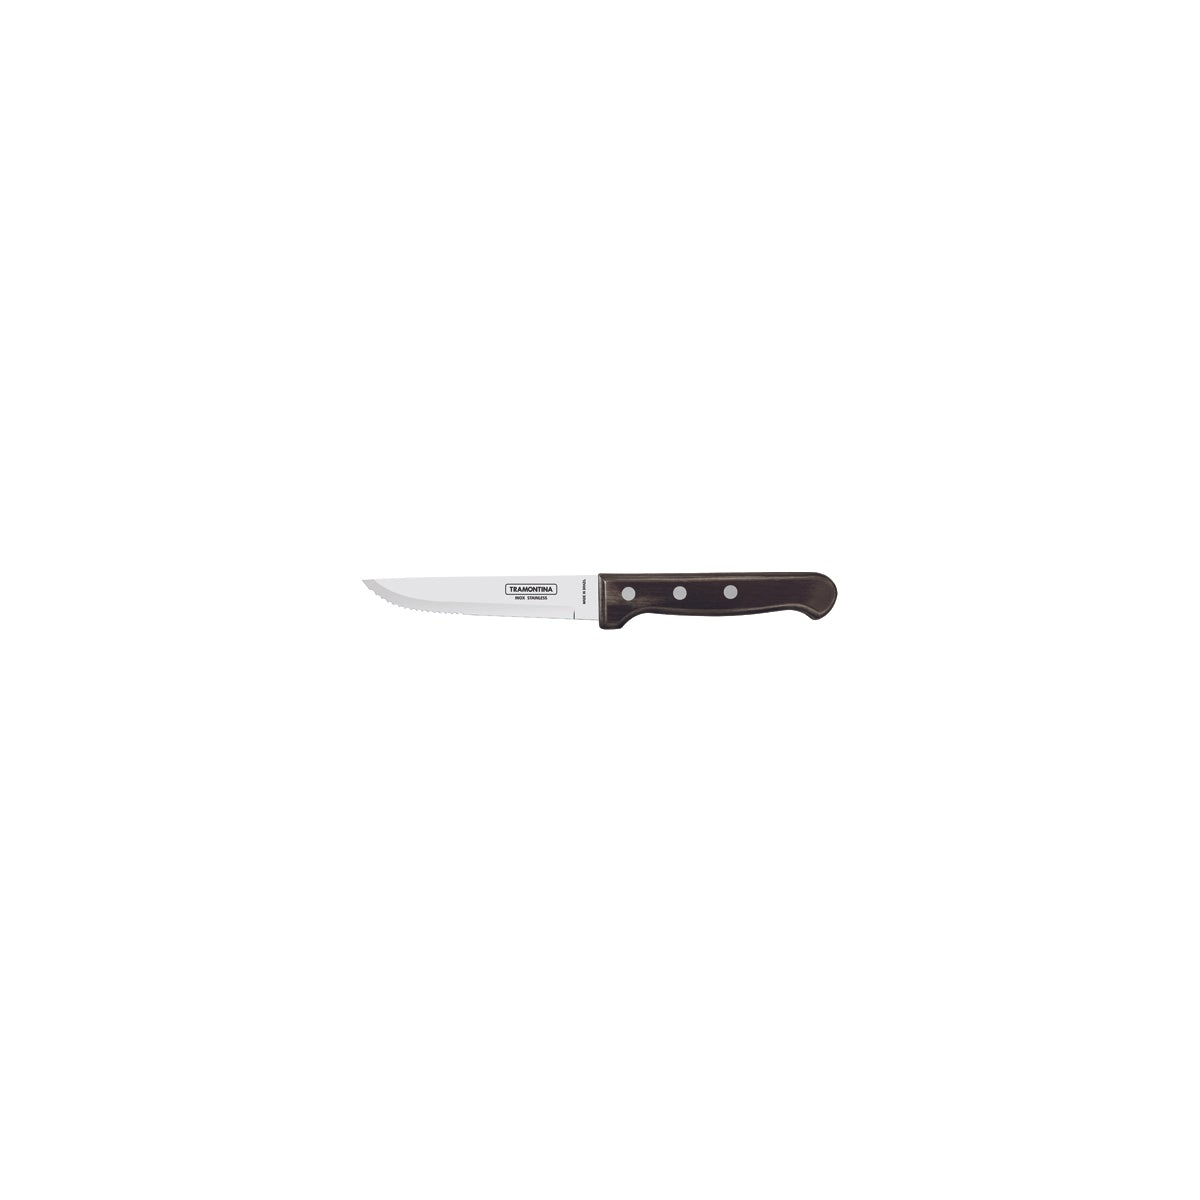 TM21413/095 Tramontina Churrasco Steak Knife Gaucho with Polywood Handle Brown 127mm Tomkin Australia Hospitality Supplies